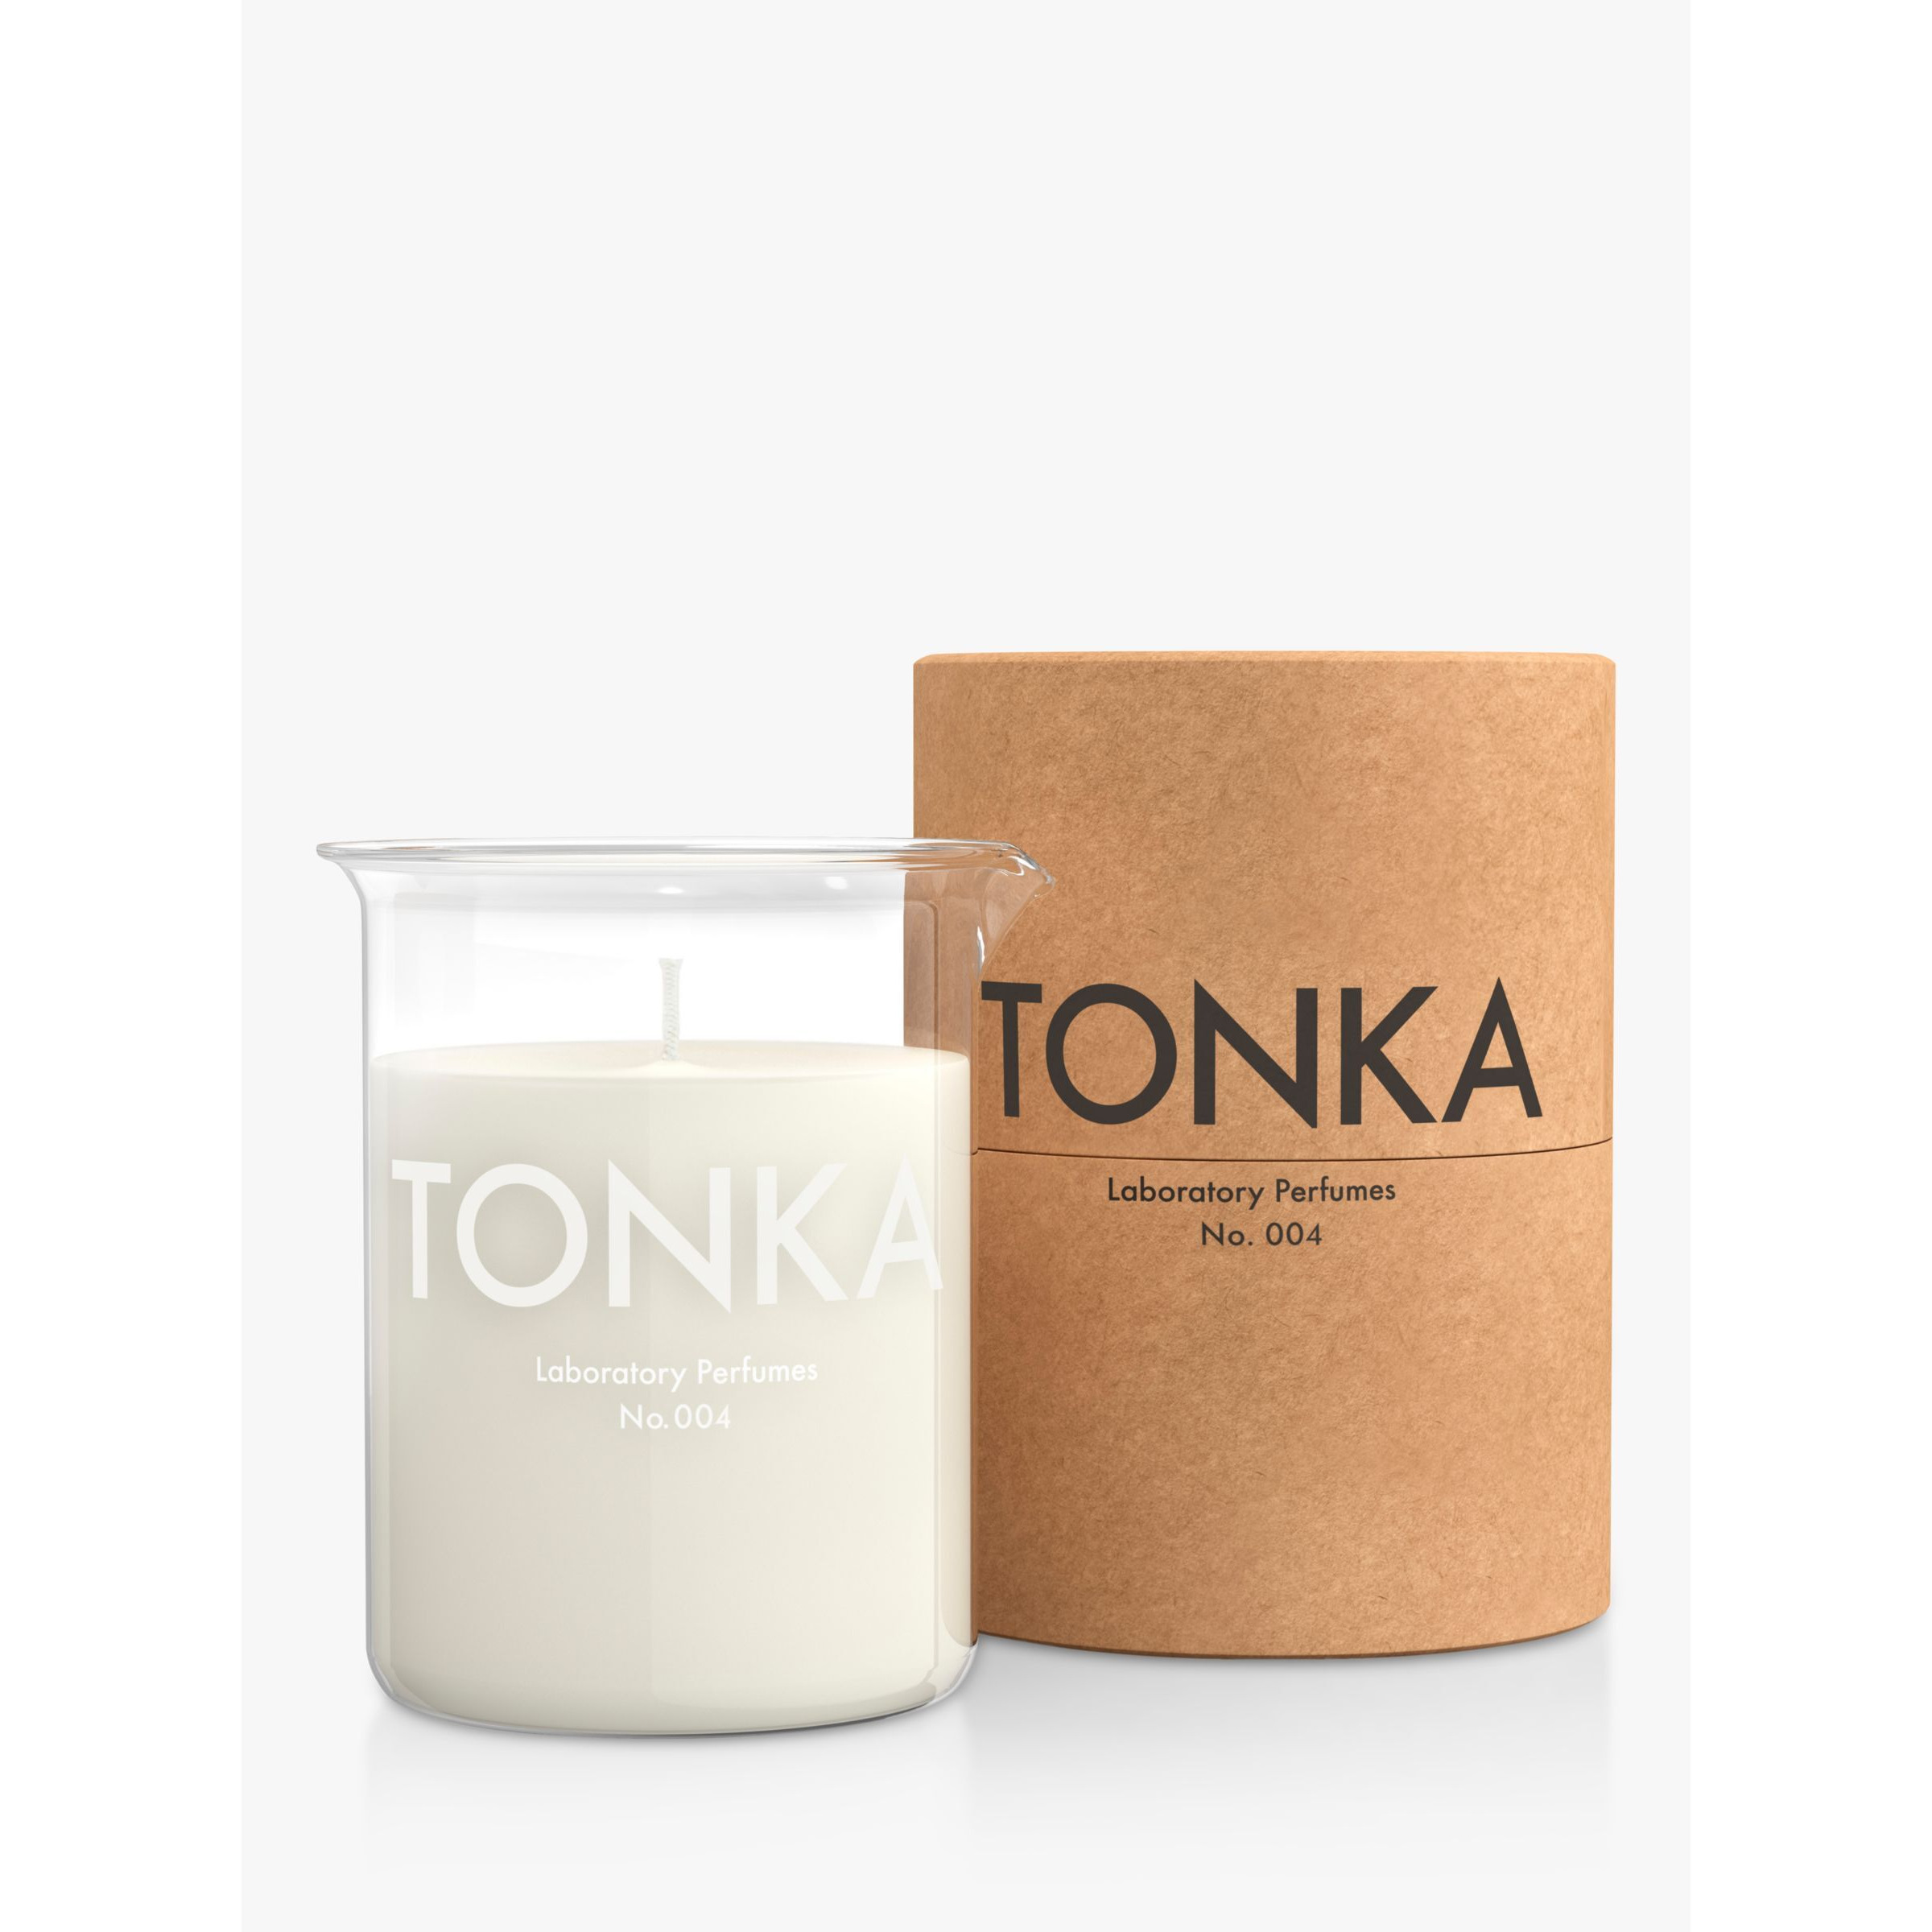 Laboratory Perfumes Tonka Candle, 200g - image 1